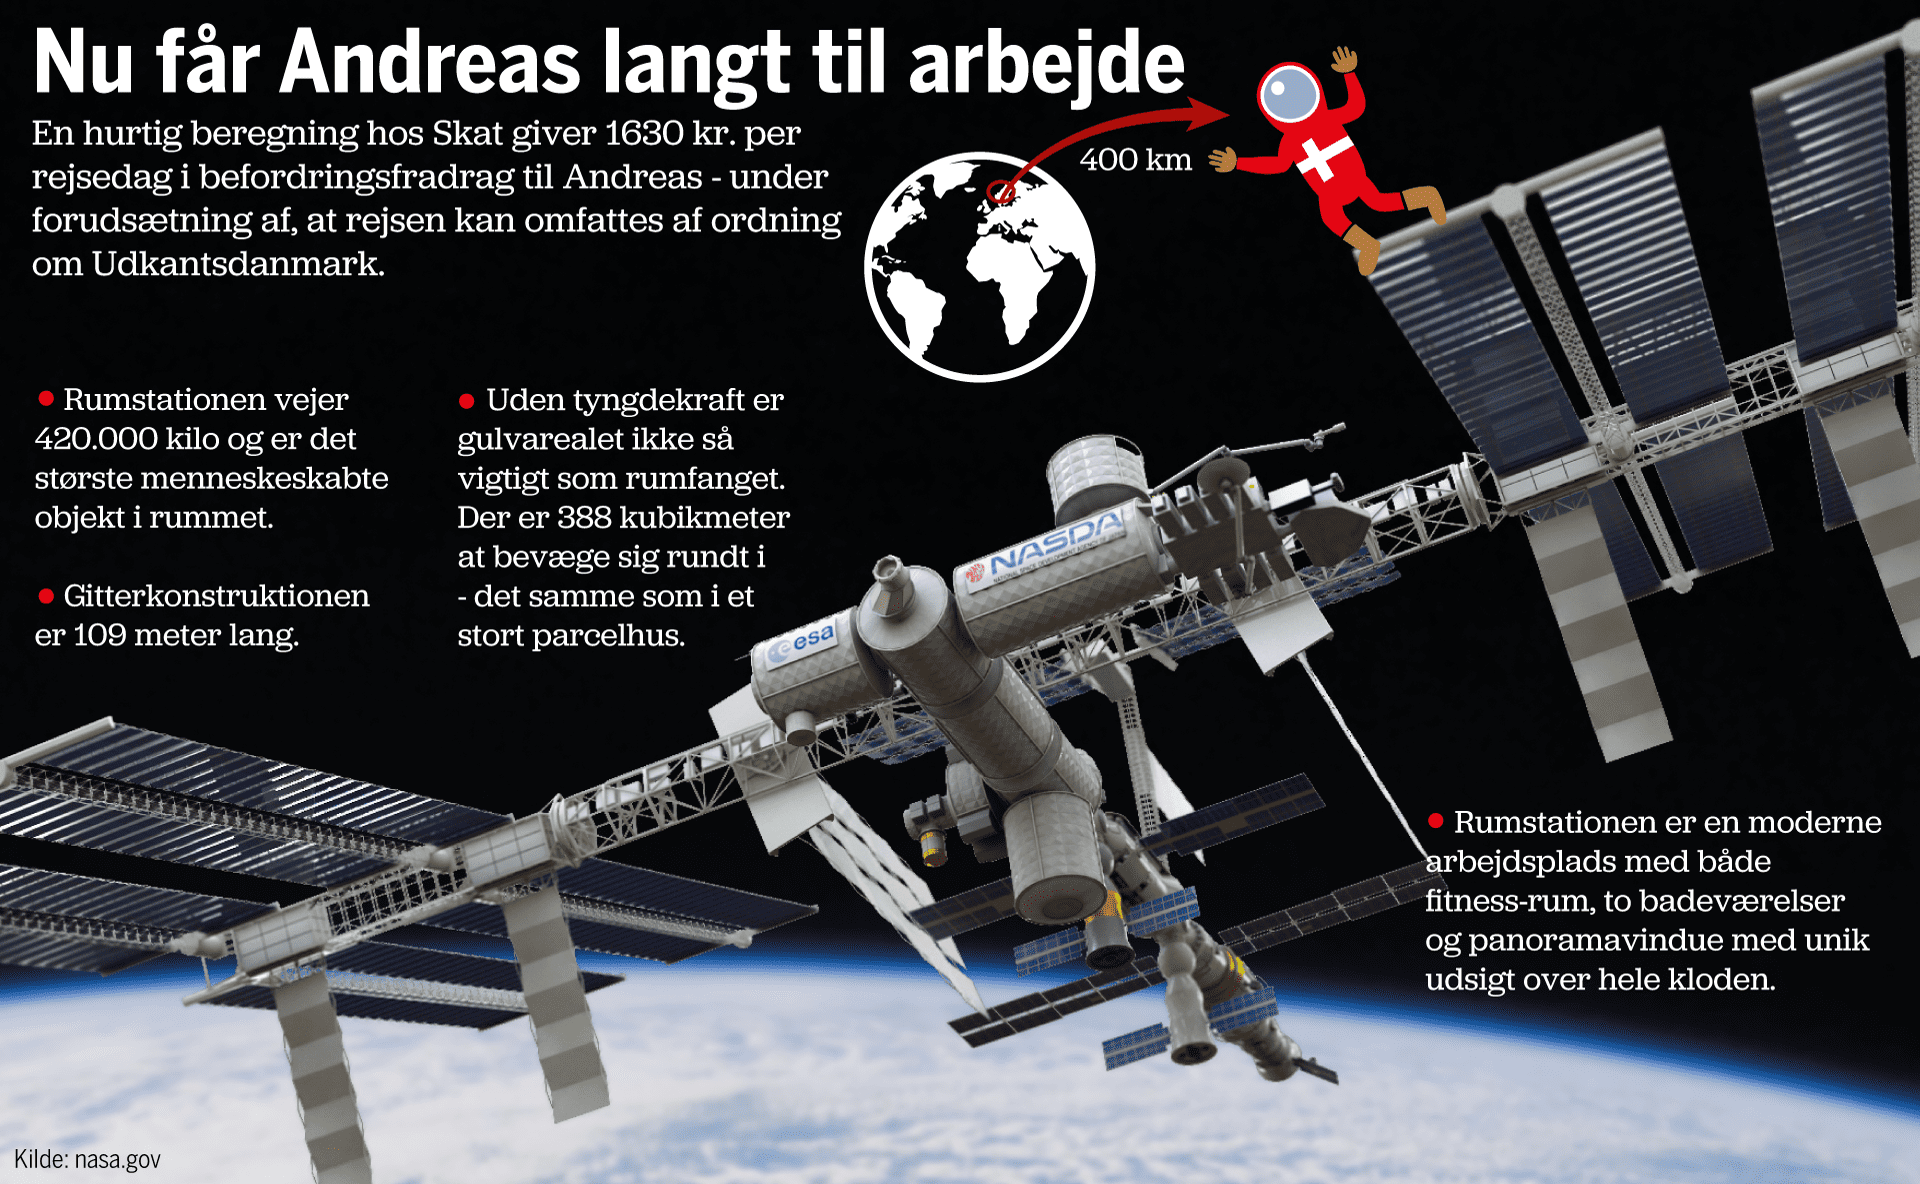 Andreas astronaut befordringsfradrag udkantsdanmark